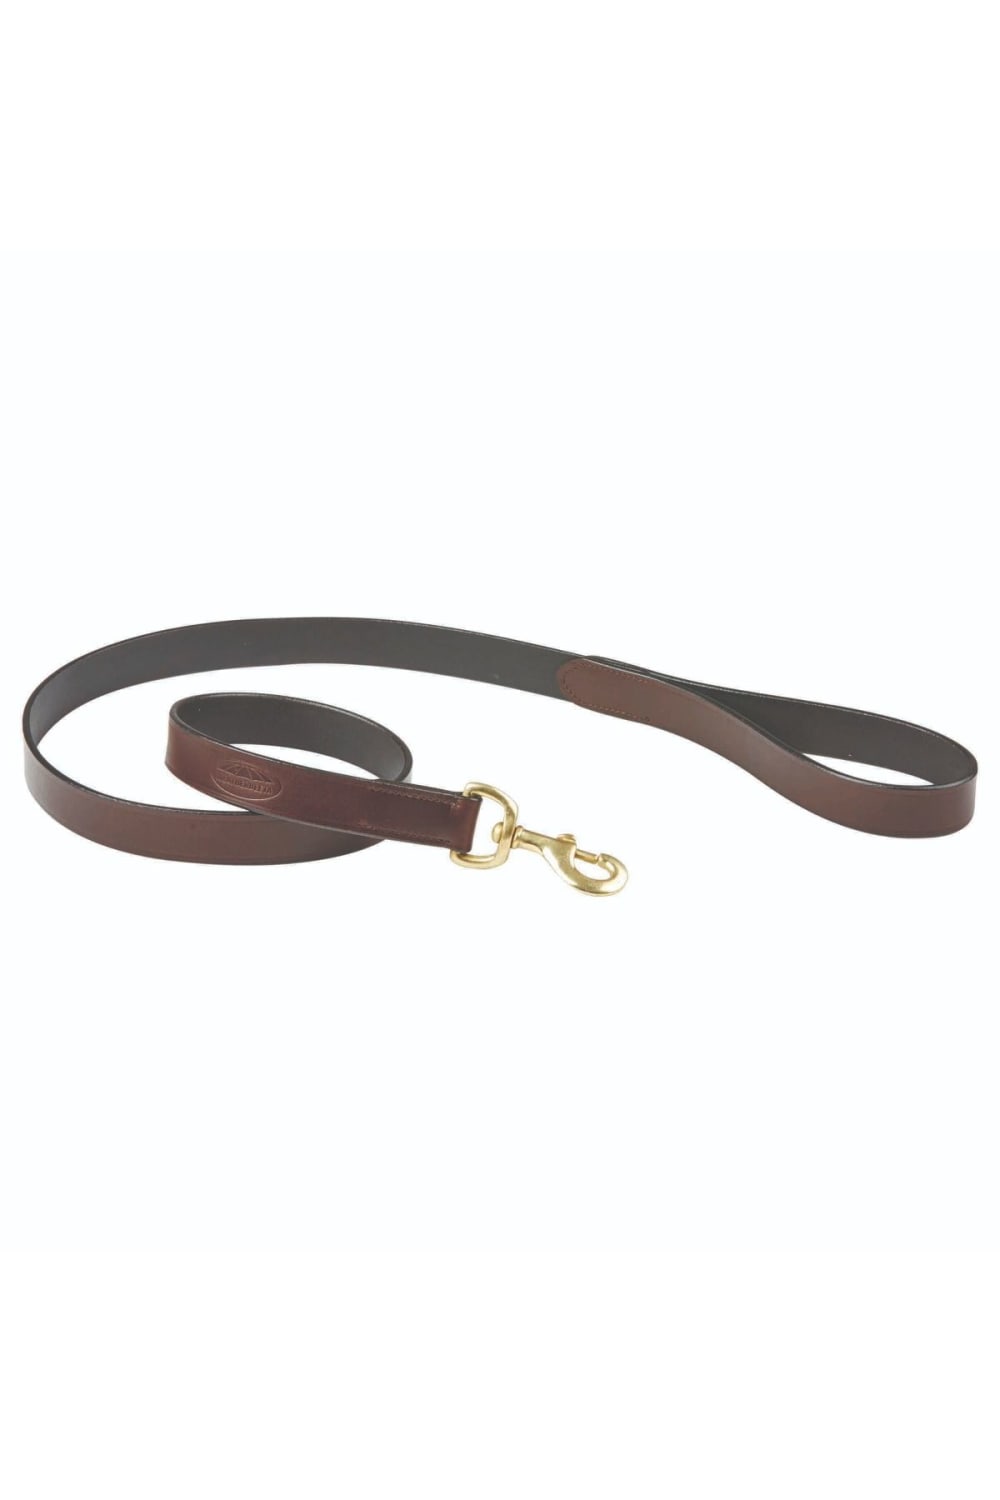 Weatherbeeta Leather Dog Lead (Brown) (One Size)